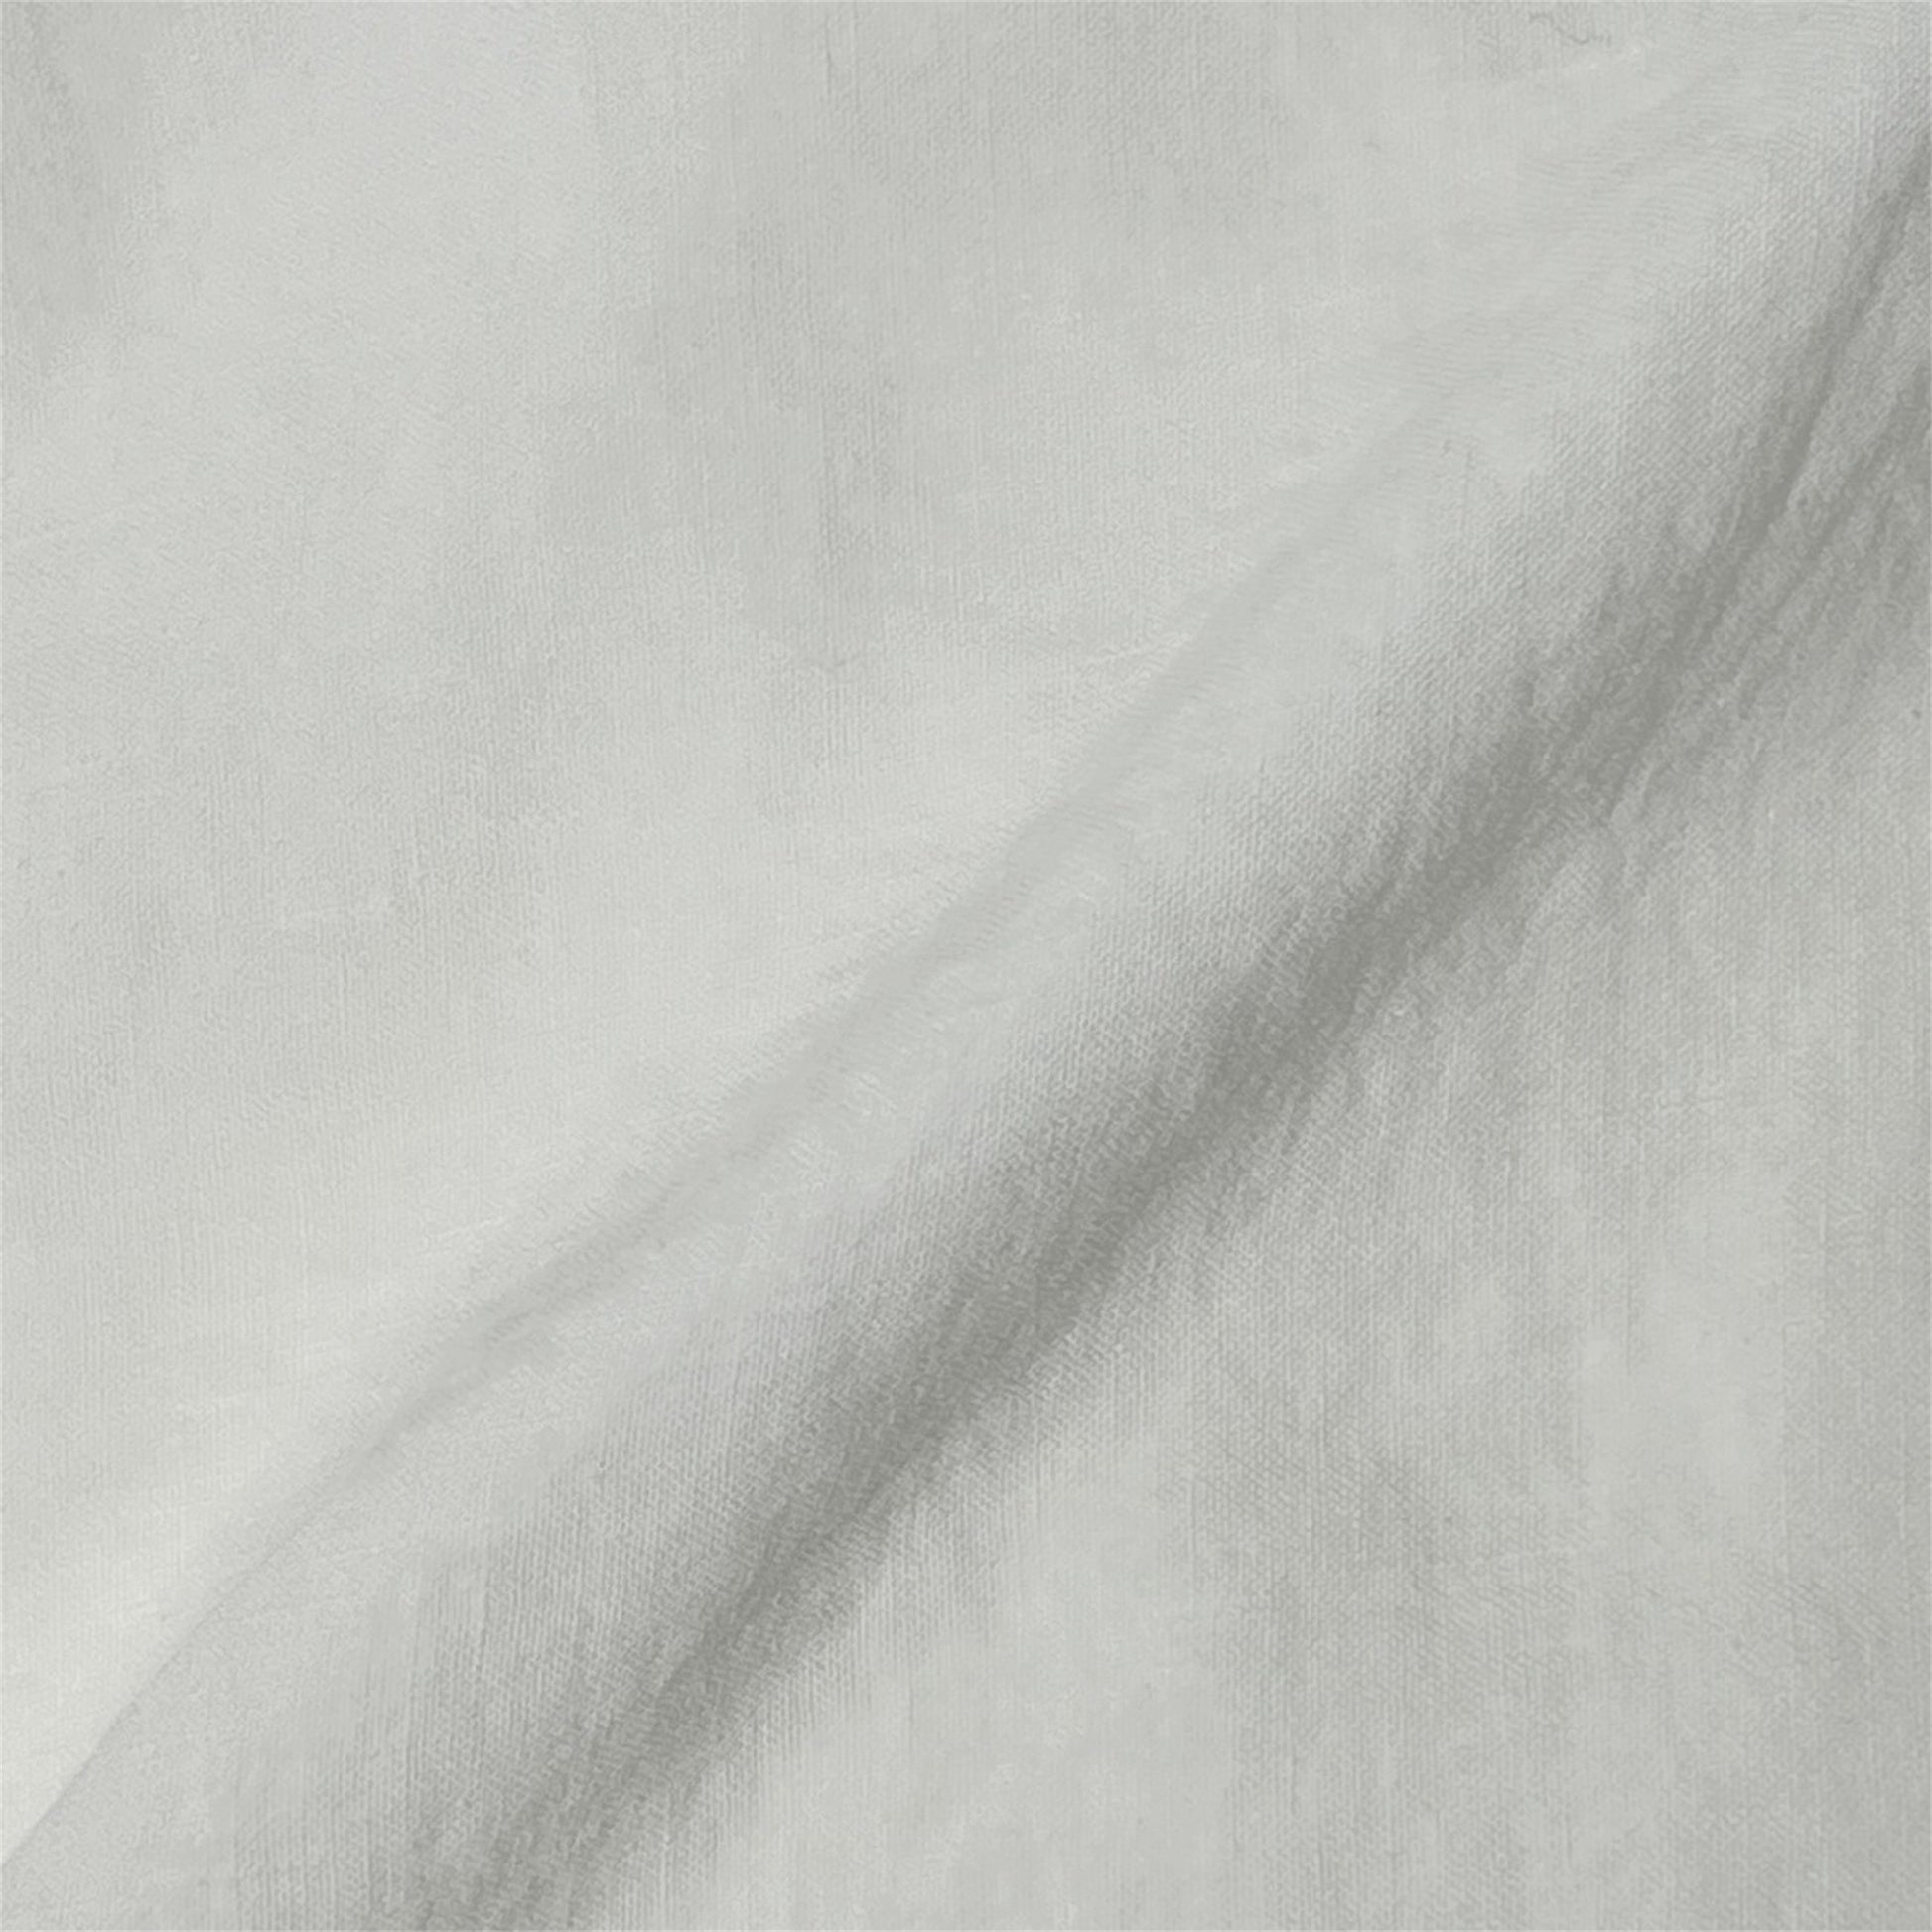 【FEEL】Multicover/マルチカバー White